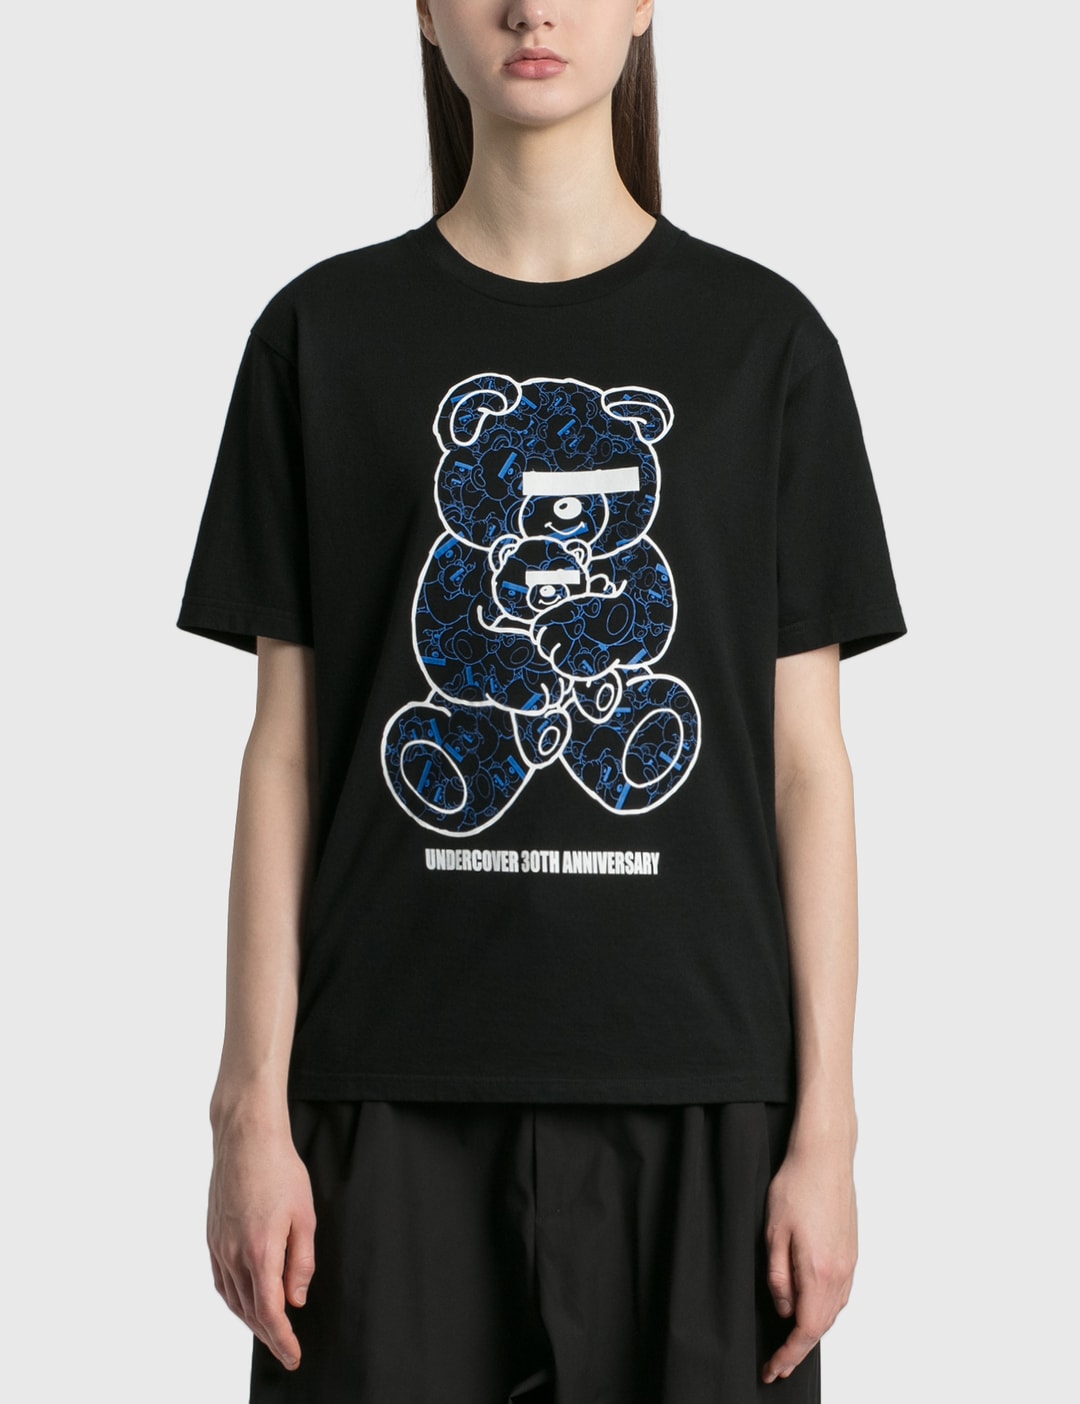 New Louis Vuitton Teddy Bear Teddy Bear New Bearbrick T-Shirt